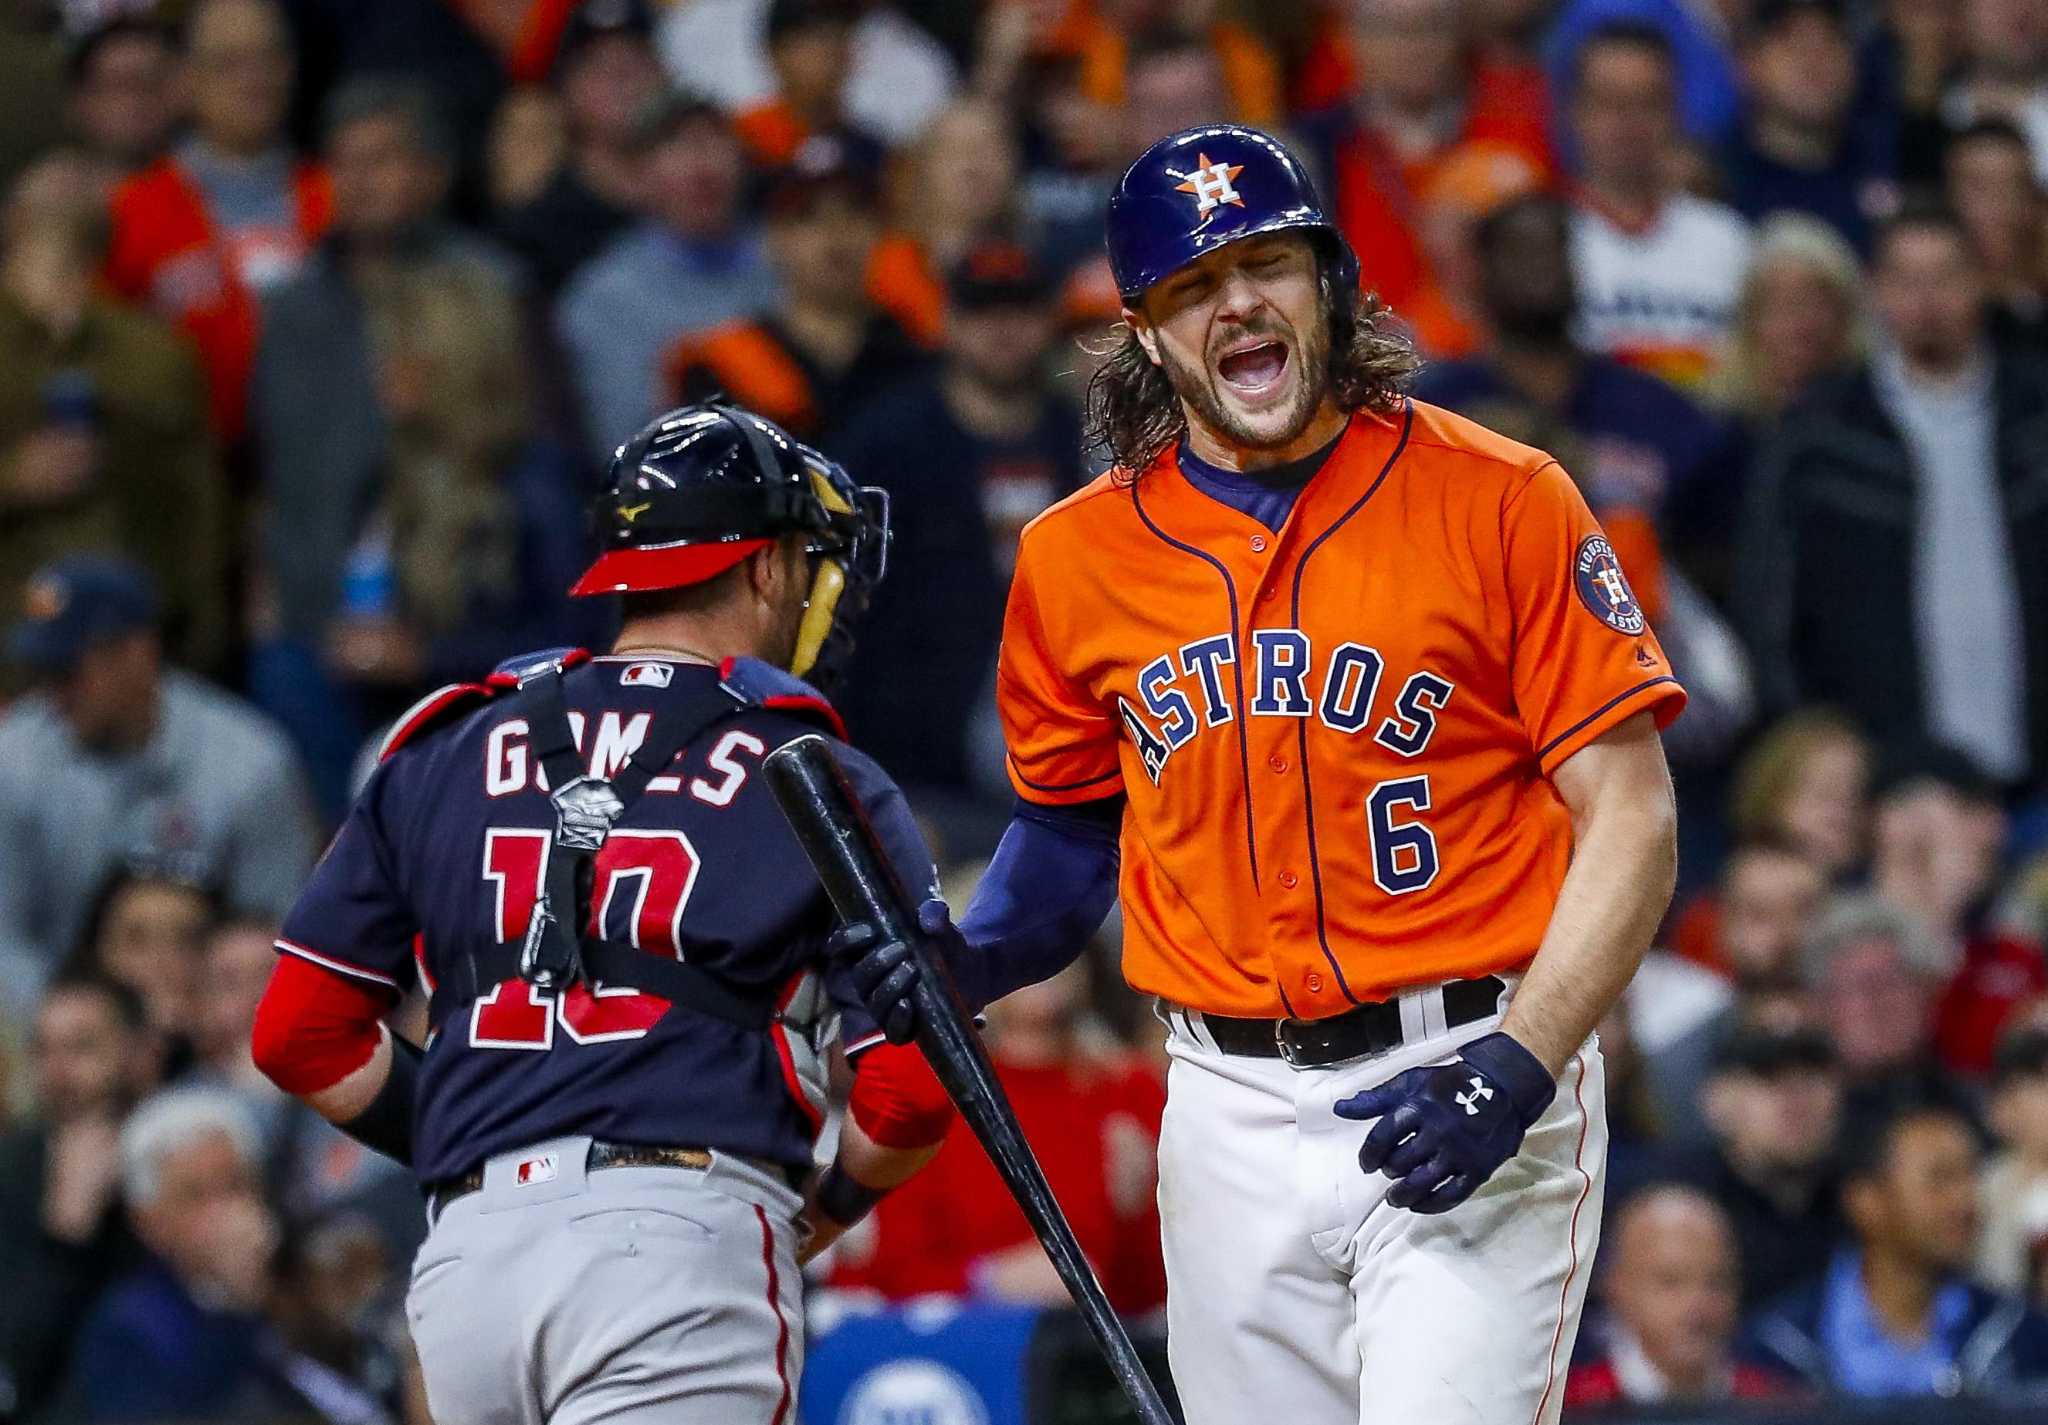 The Astros win World Series Game 7 behind journeyman Charlie